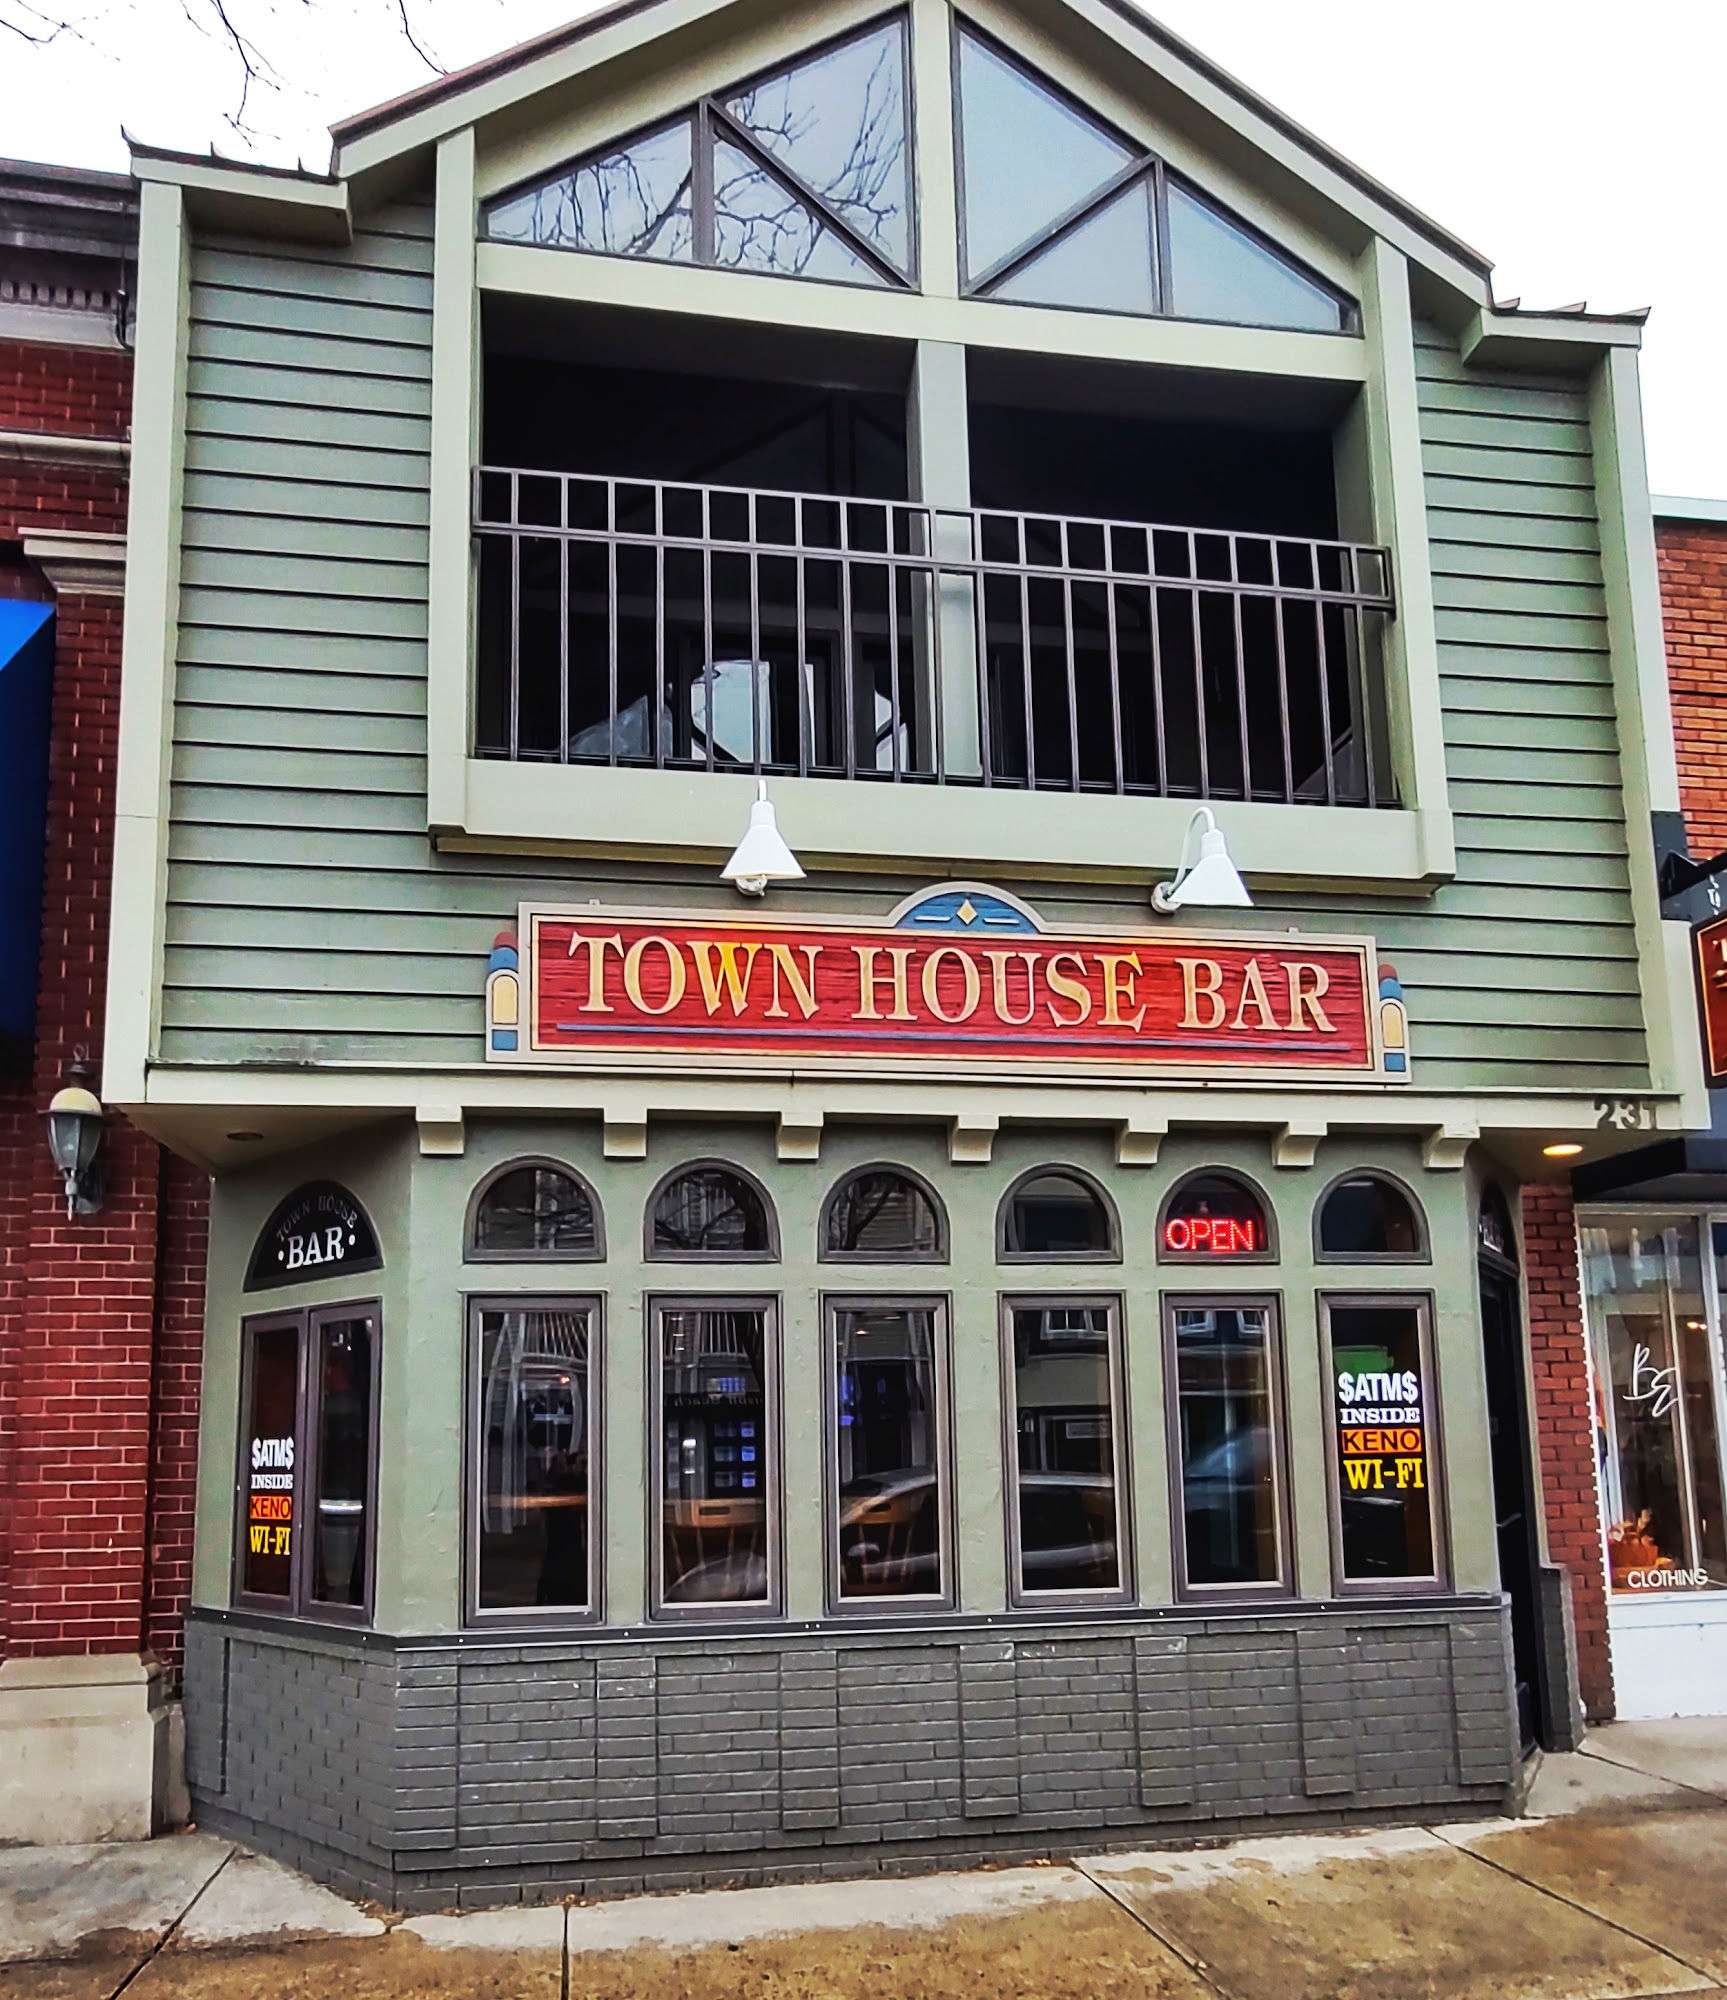 The Town House Bar